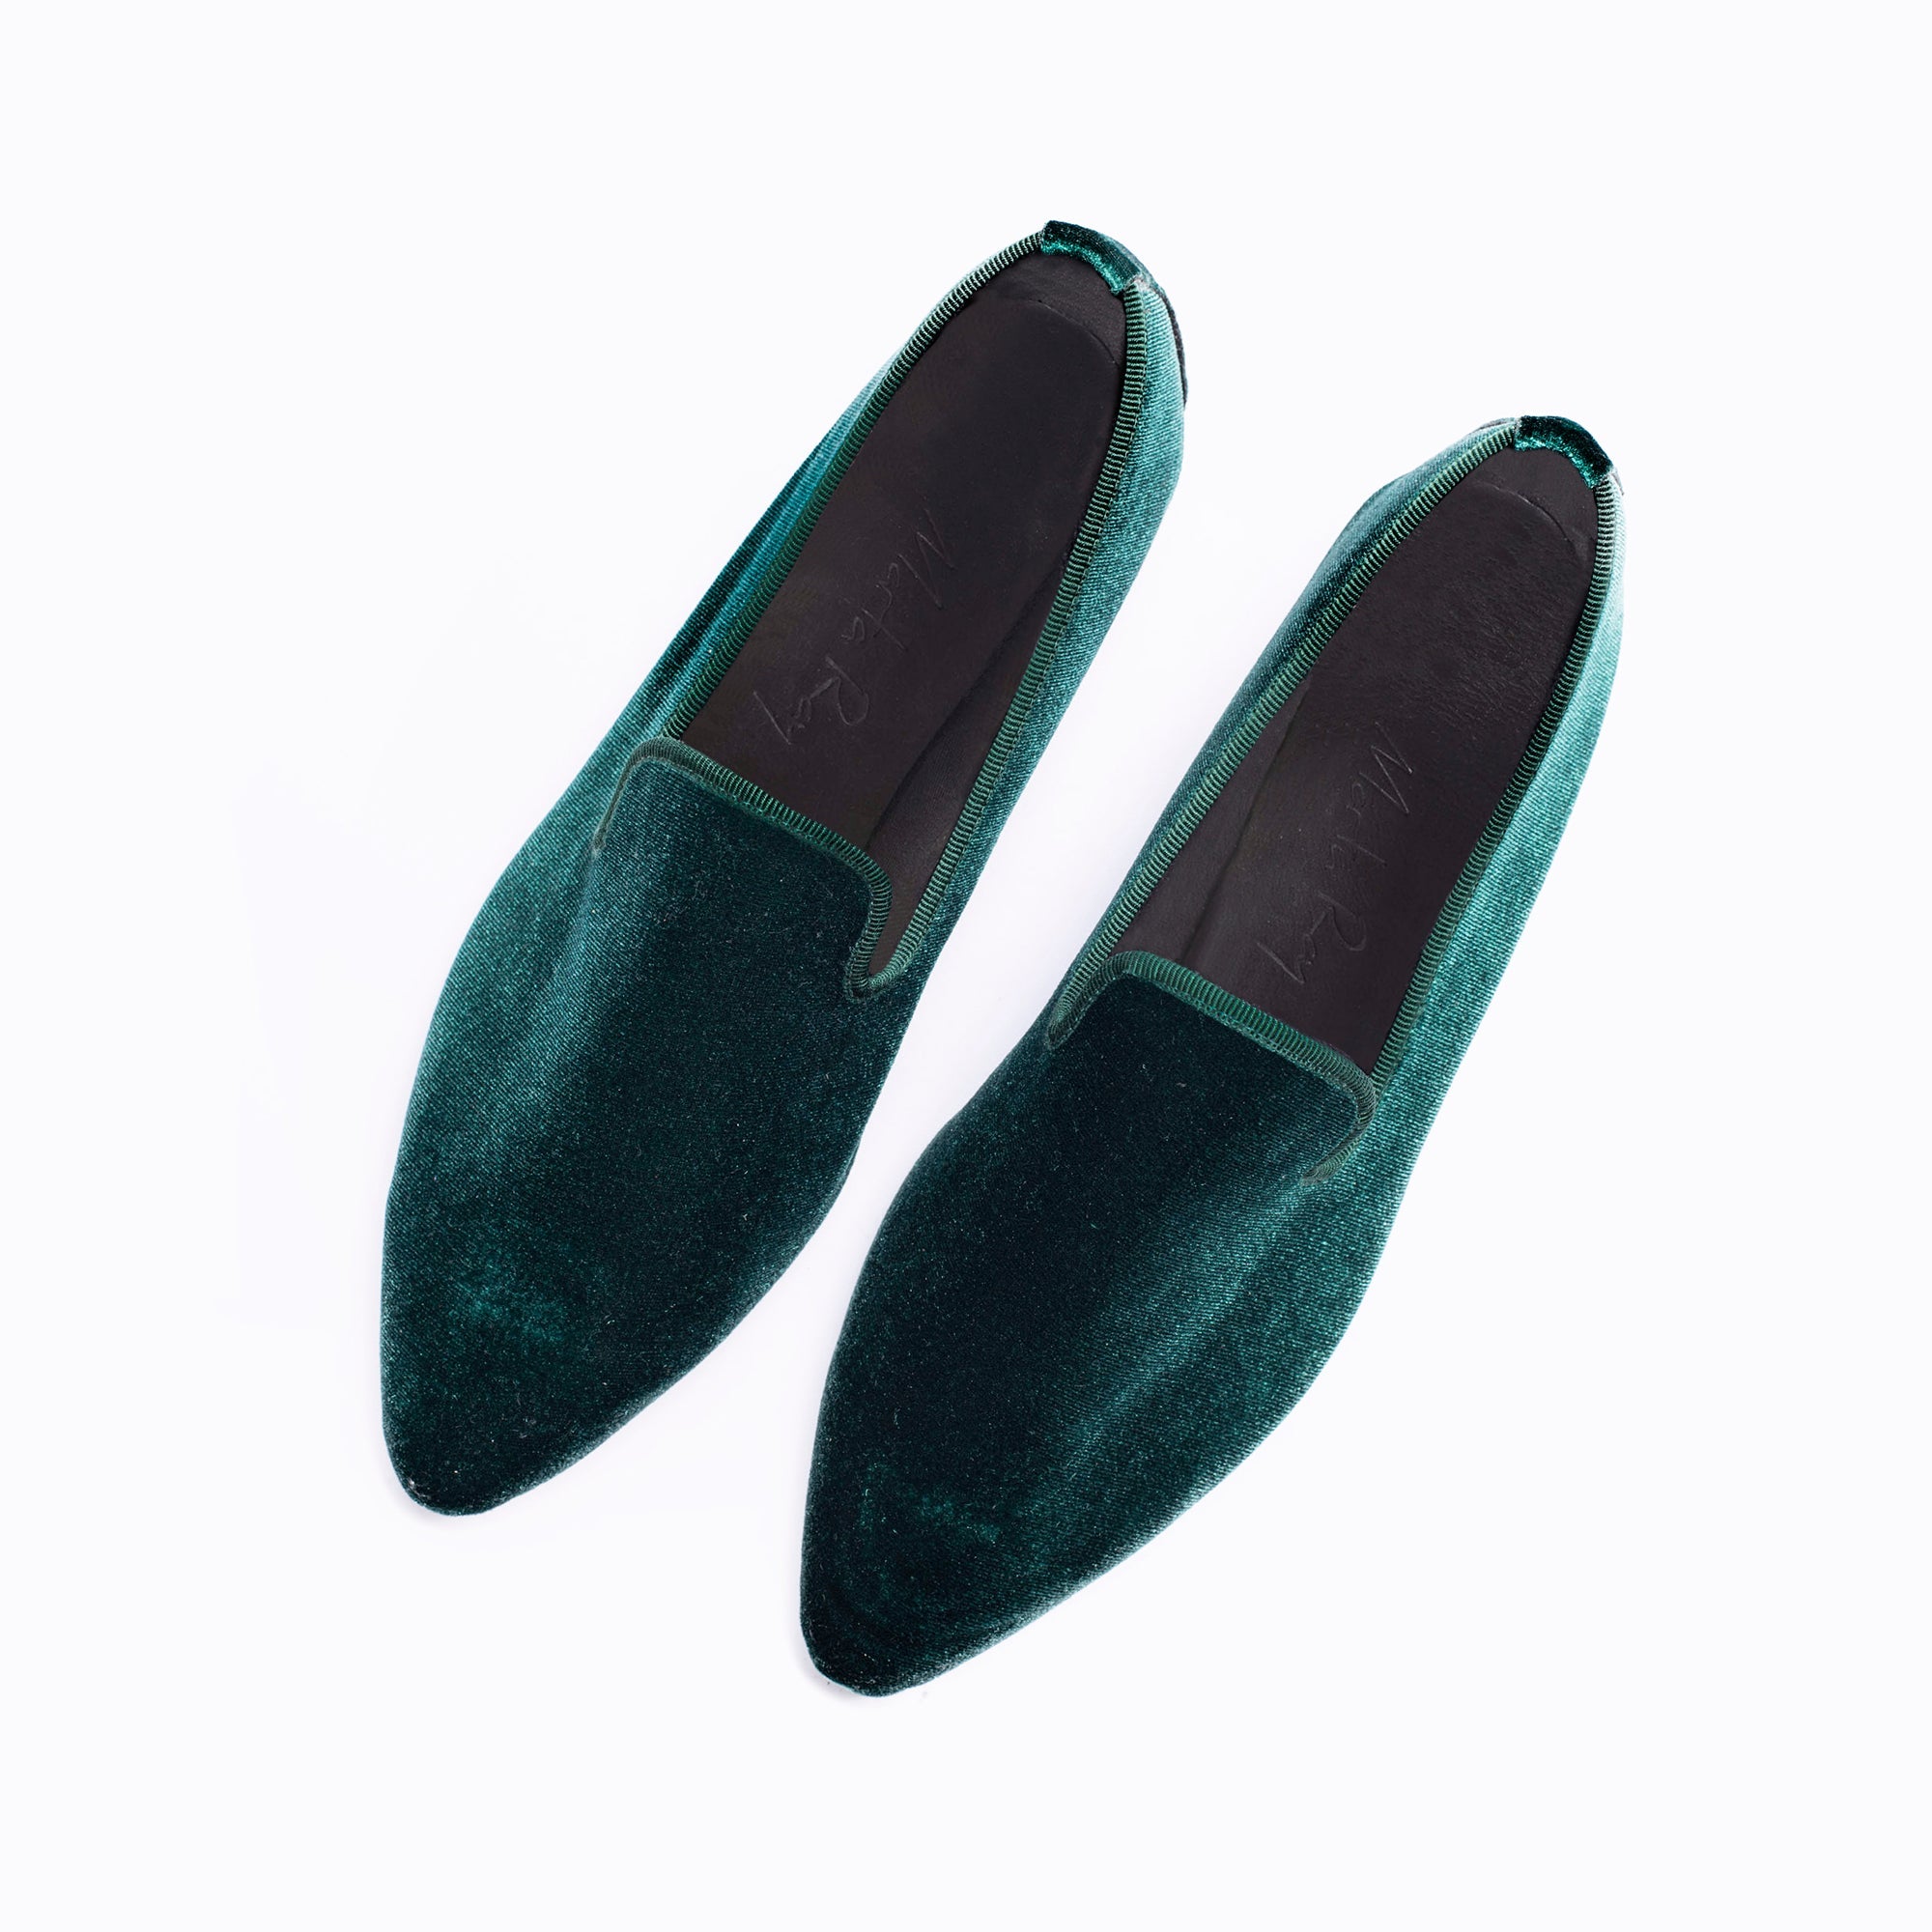 Pantofola velluto verde - Marta Ray